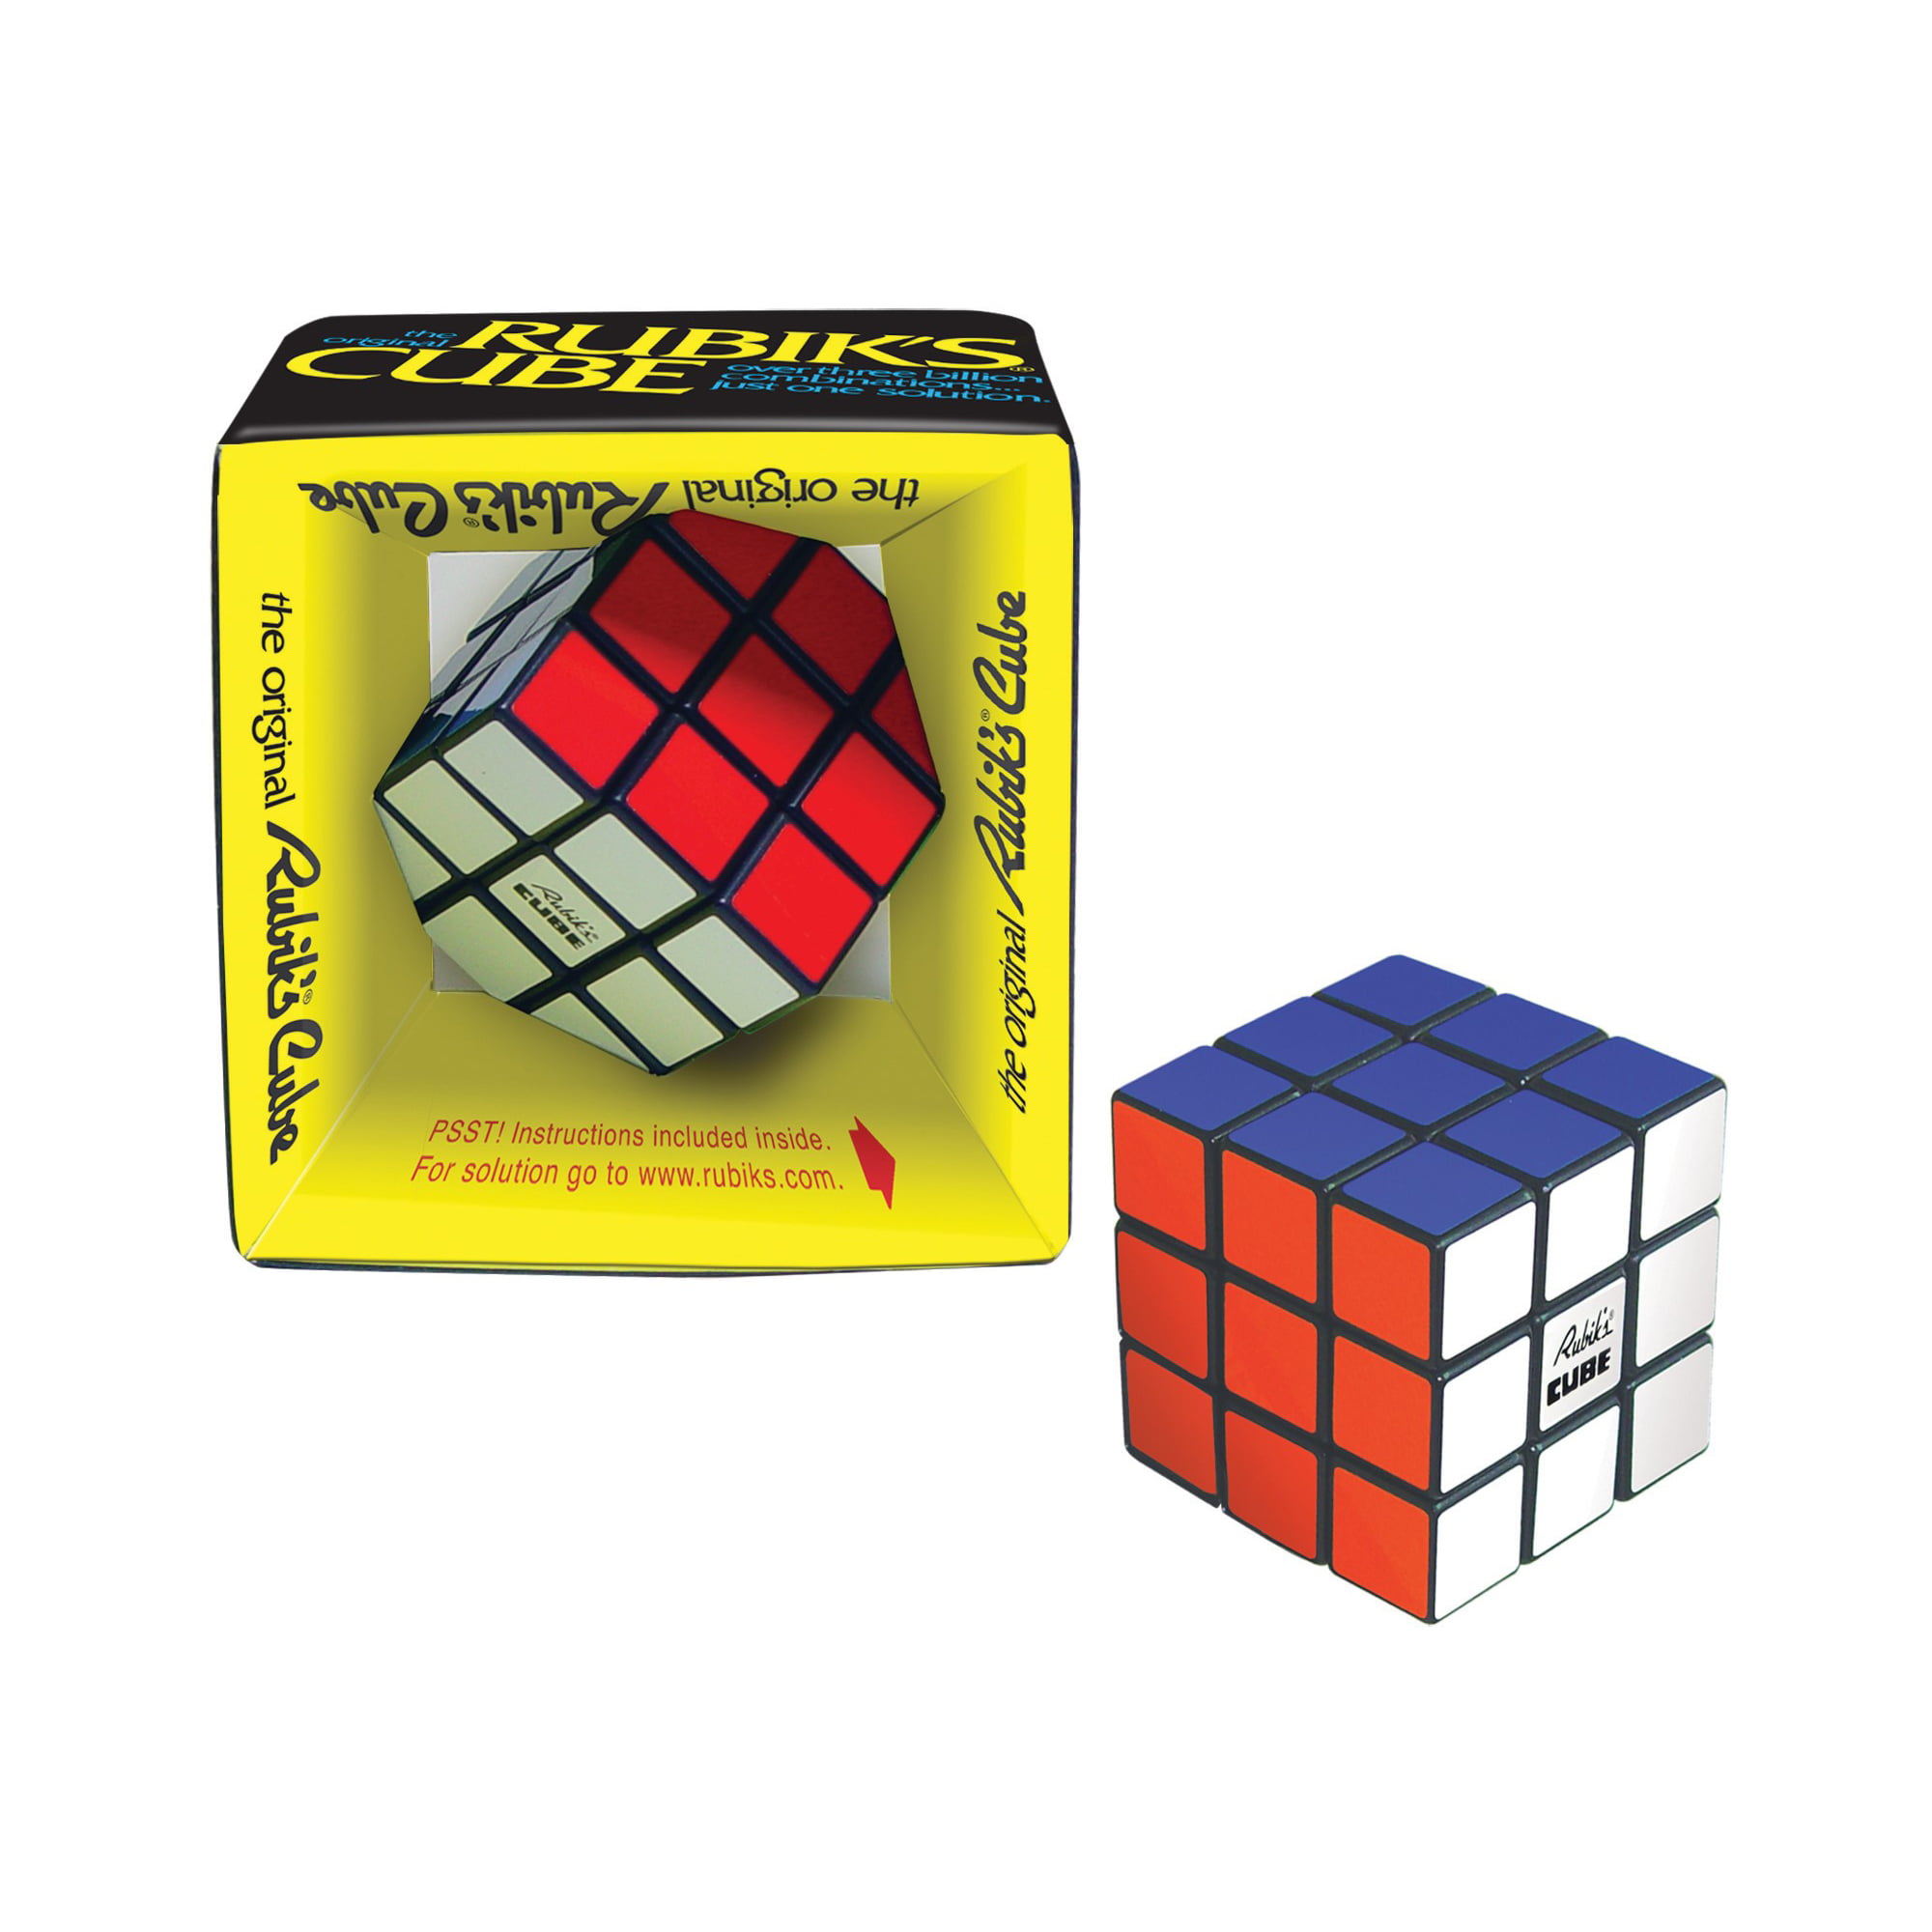 The Original Rubik'S Cube